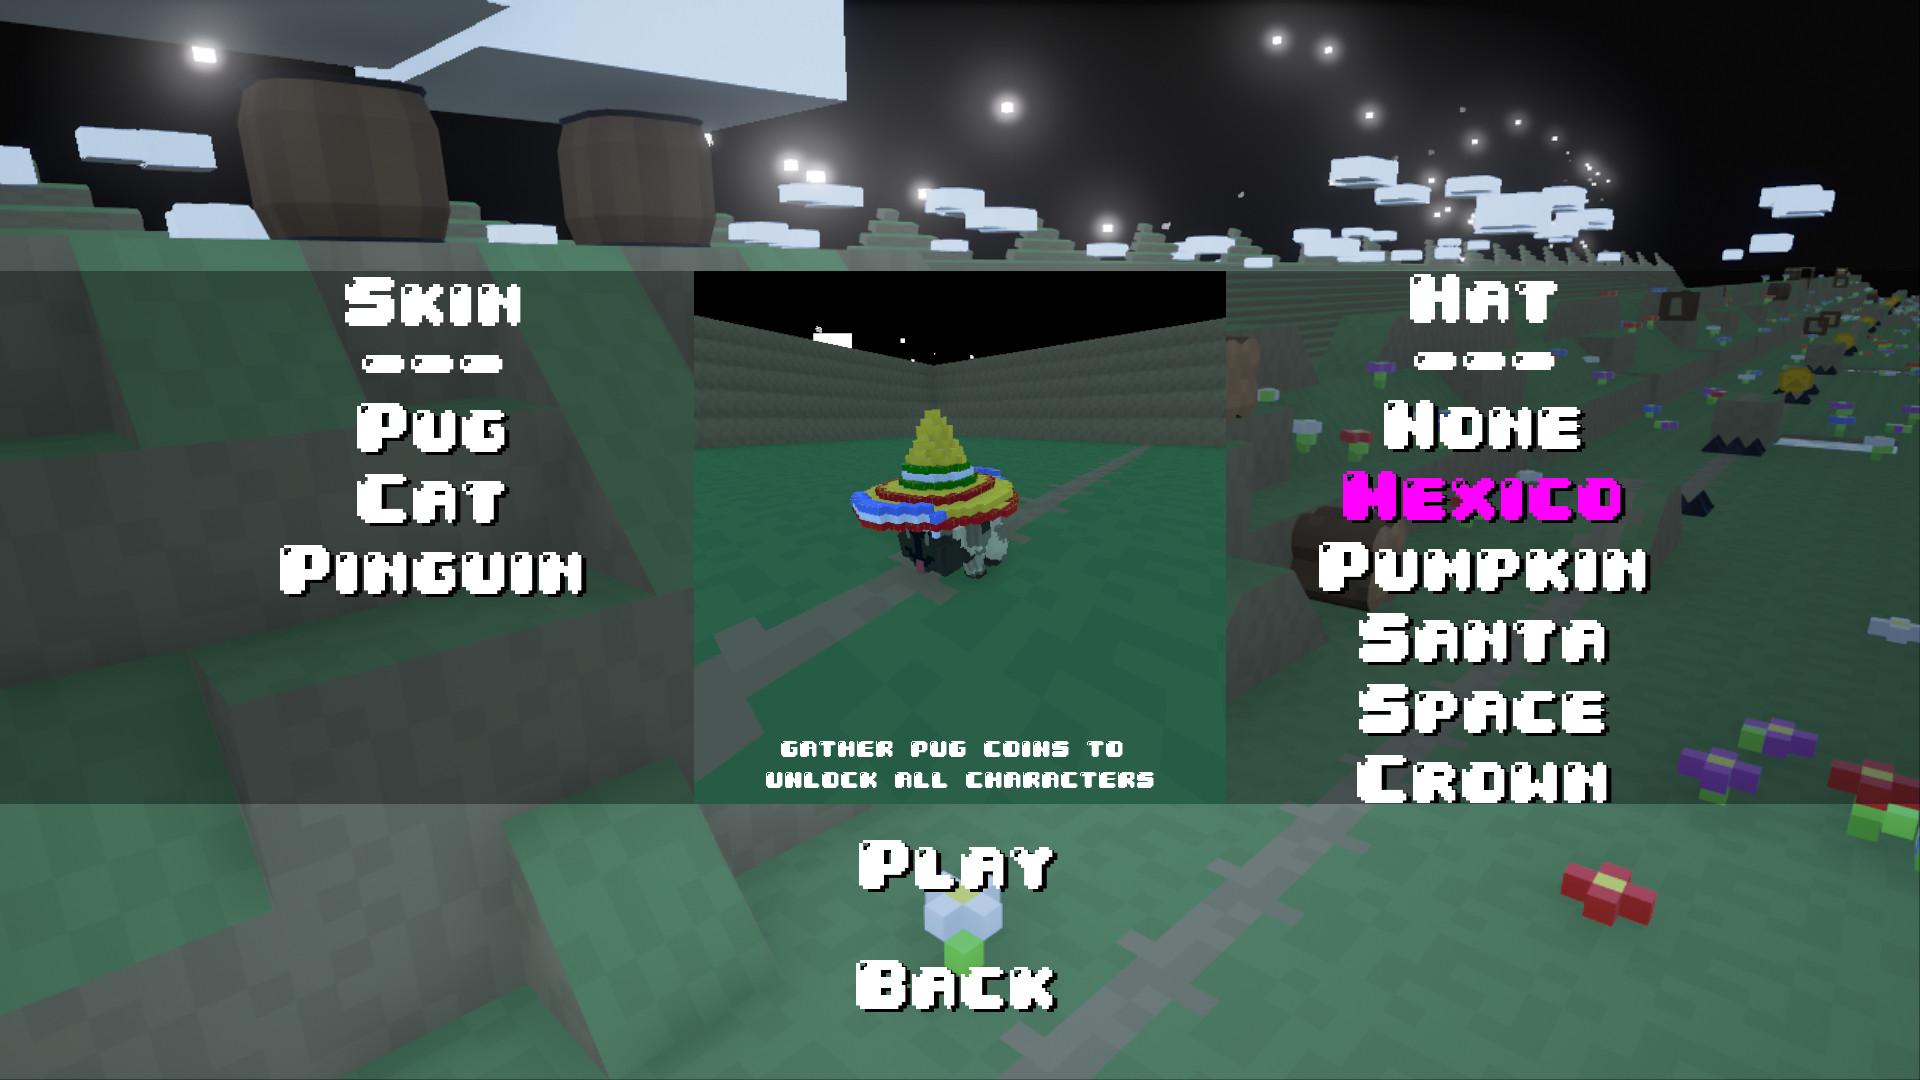 Screenshot №6 from game Turbo Pug 3D